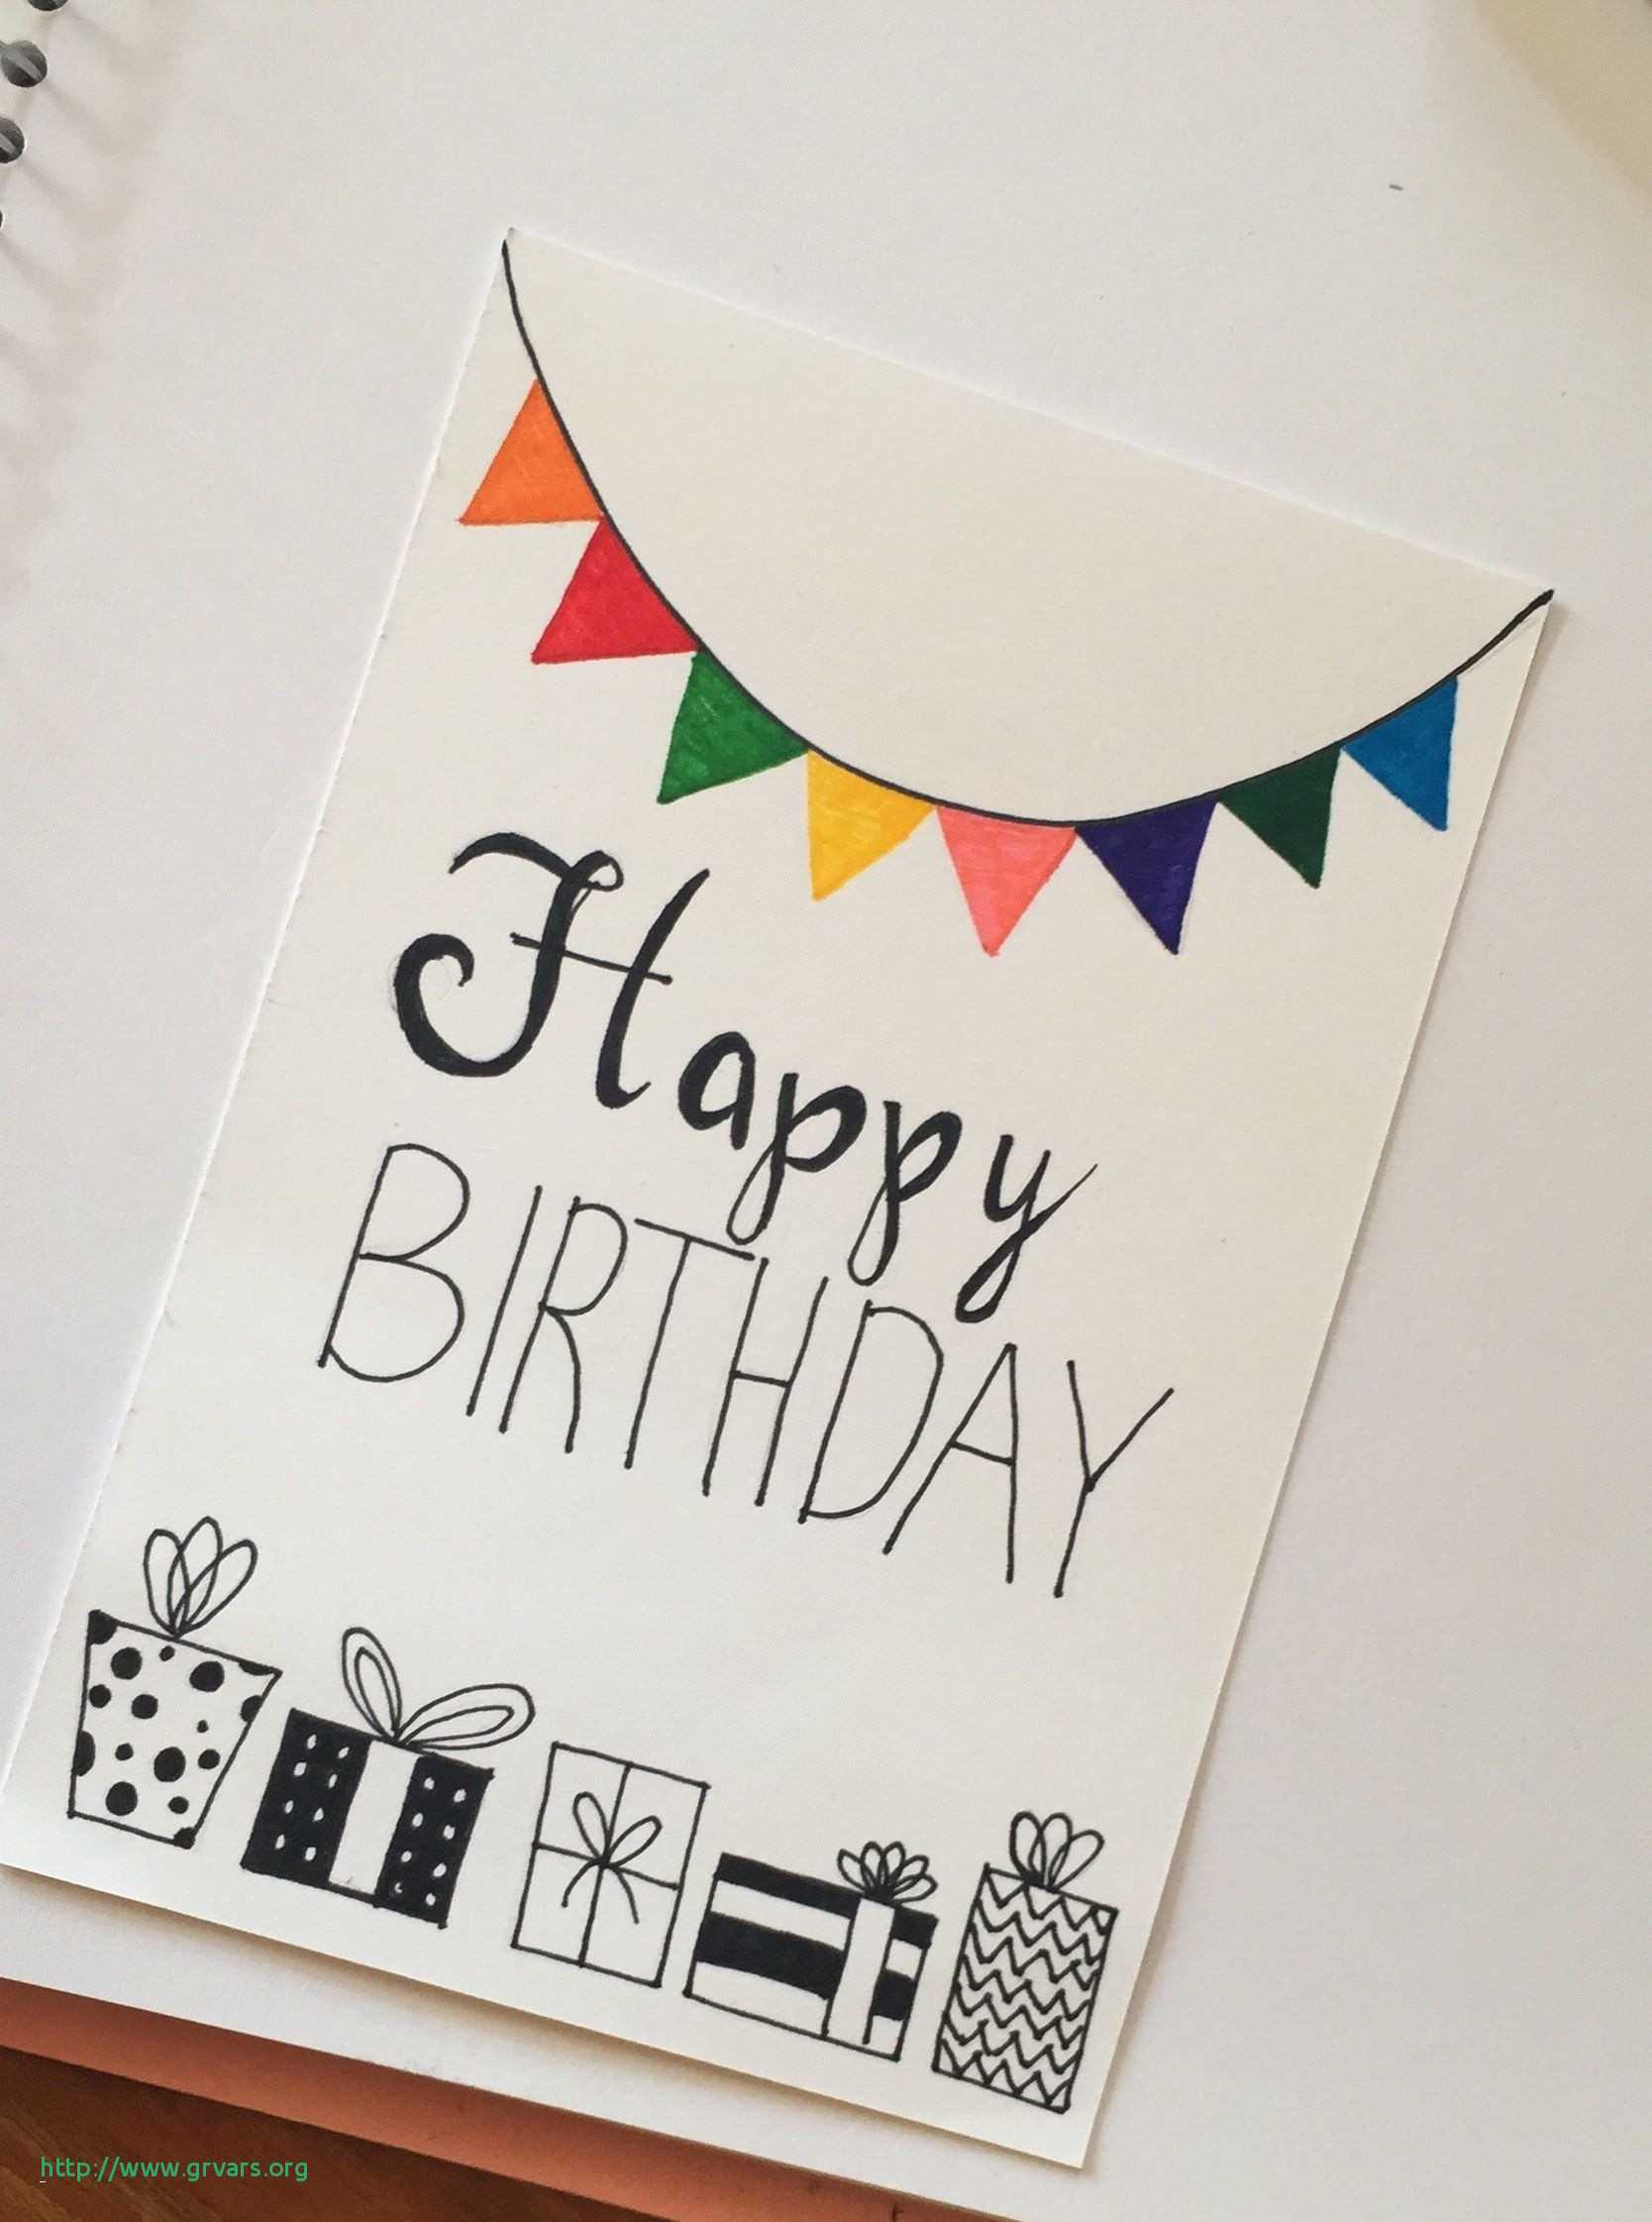 Funny Ideas For Birthday Cards Handmade Birthday Card Ideas For Best Friend Step Creative Funny